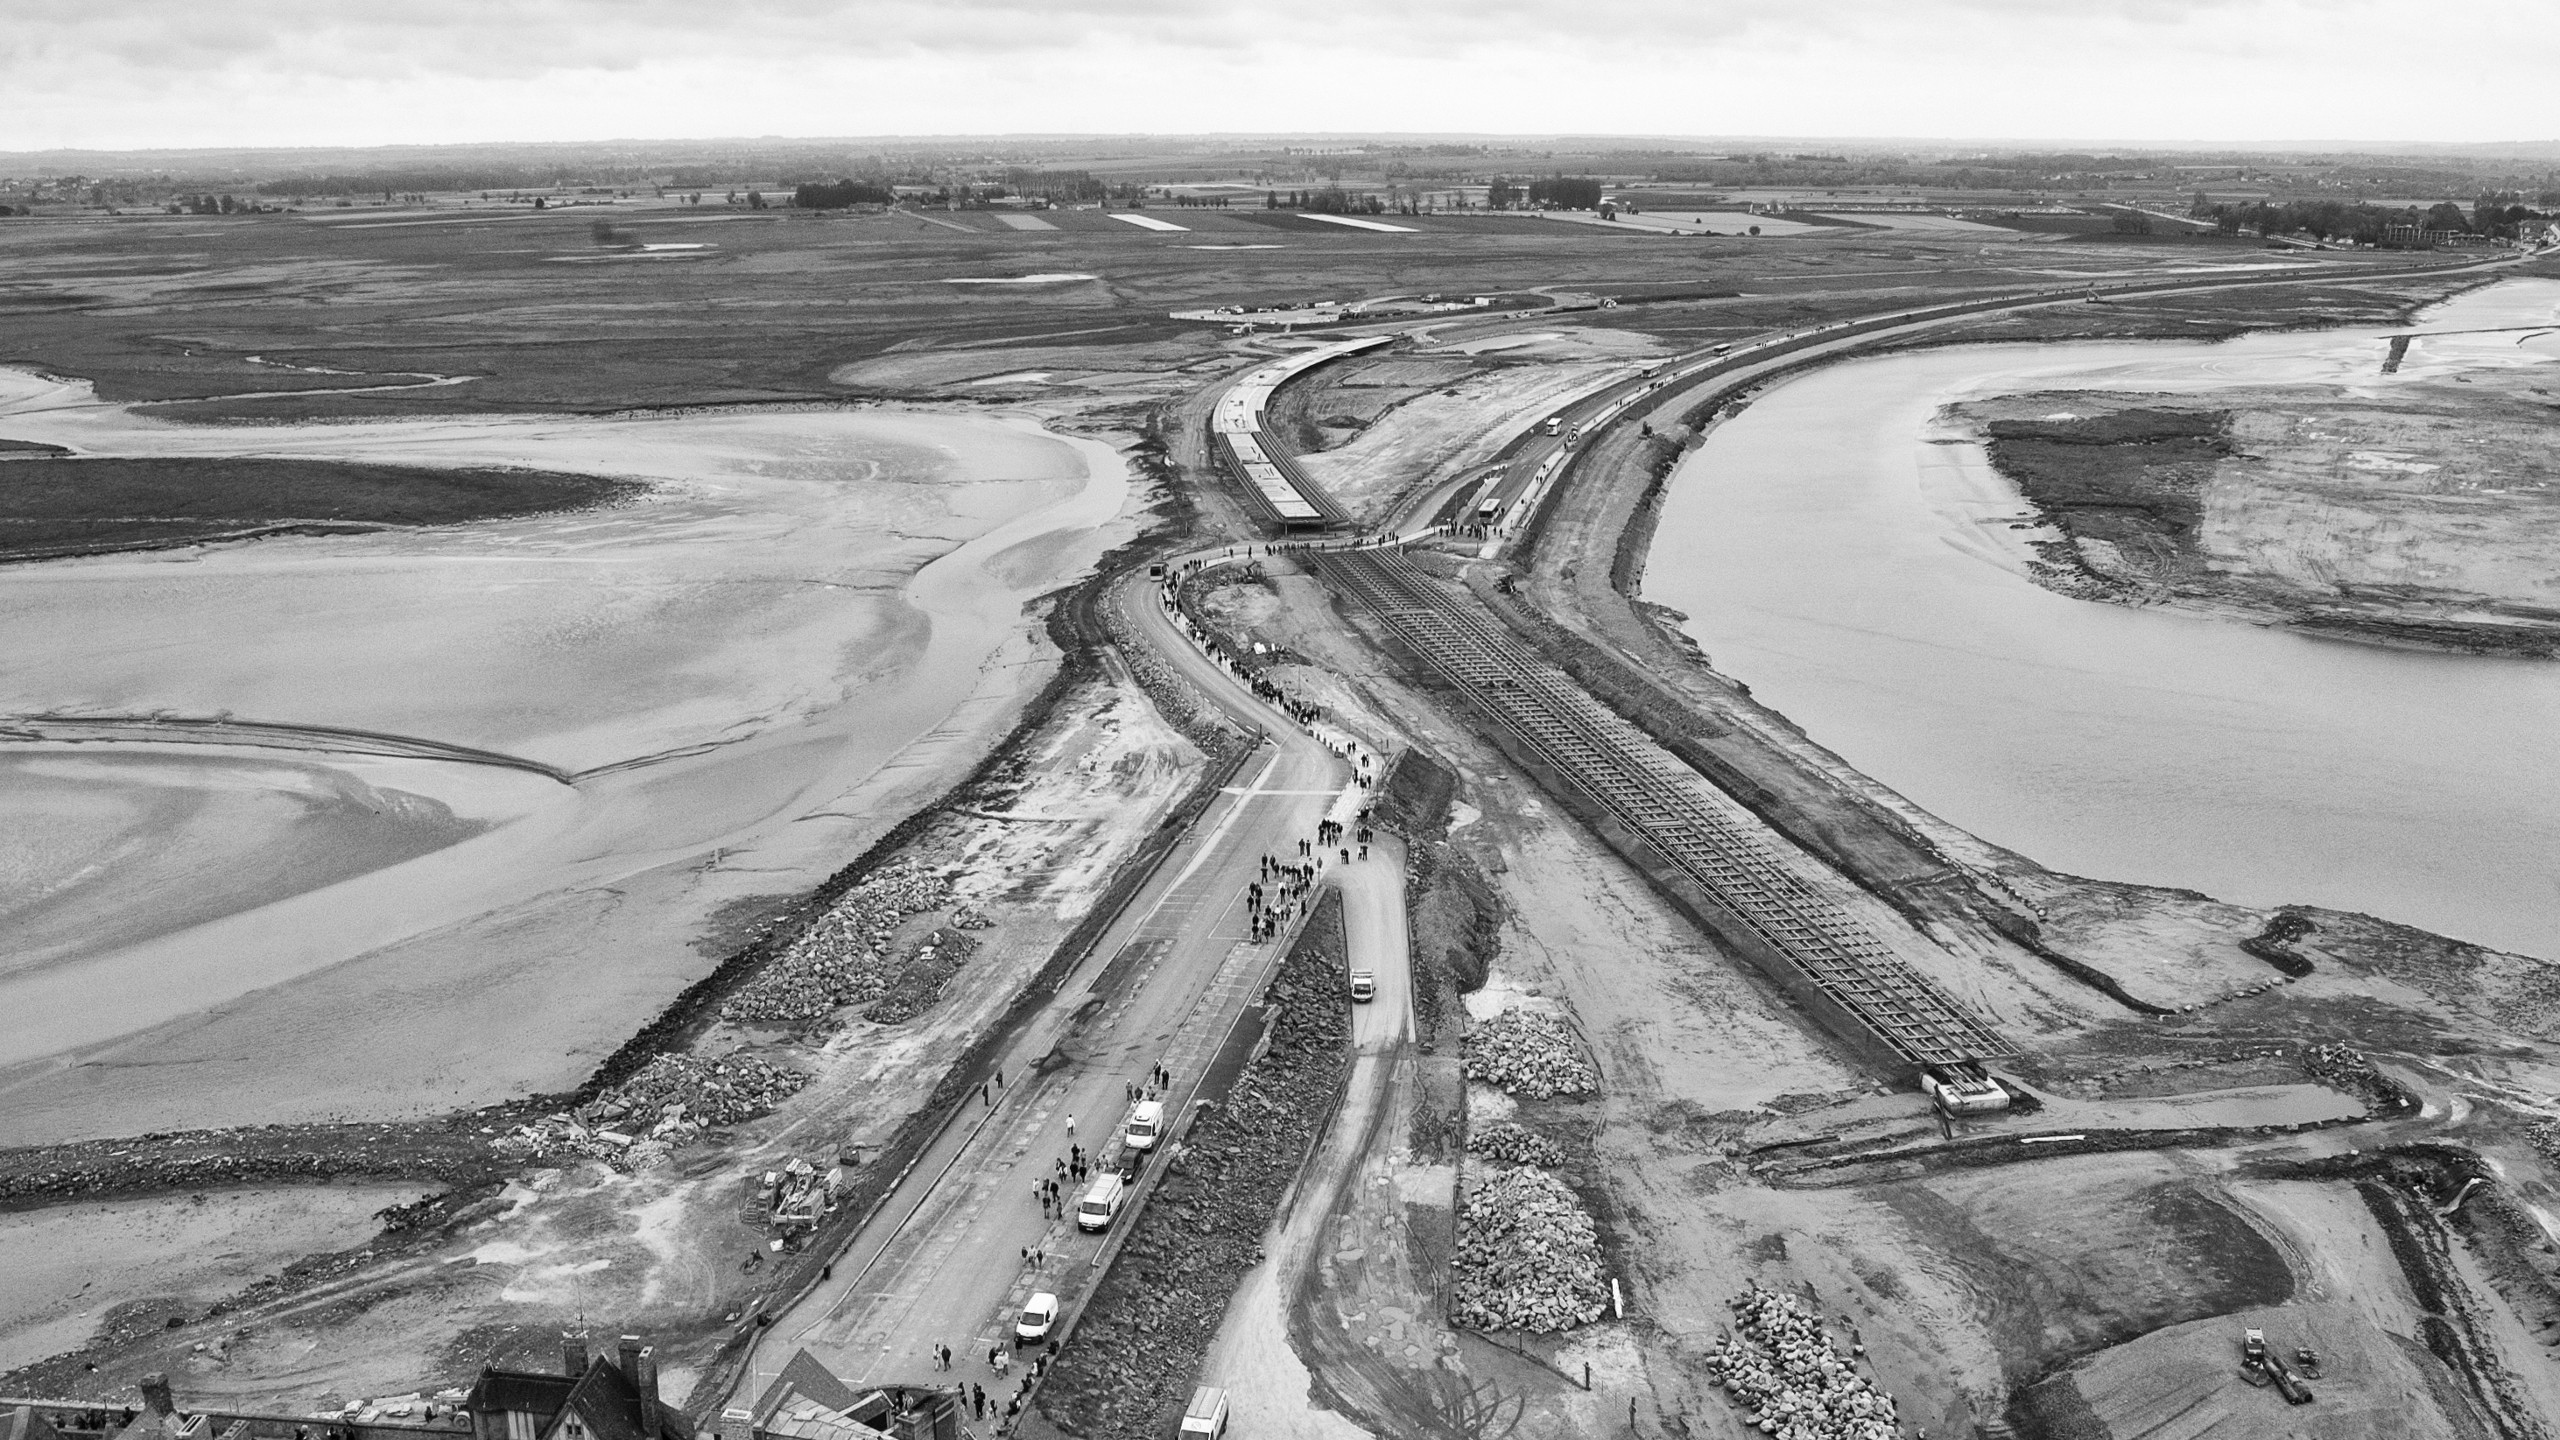 General 2560x1440 France mud road dirt road aerial view monochrome landscape